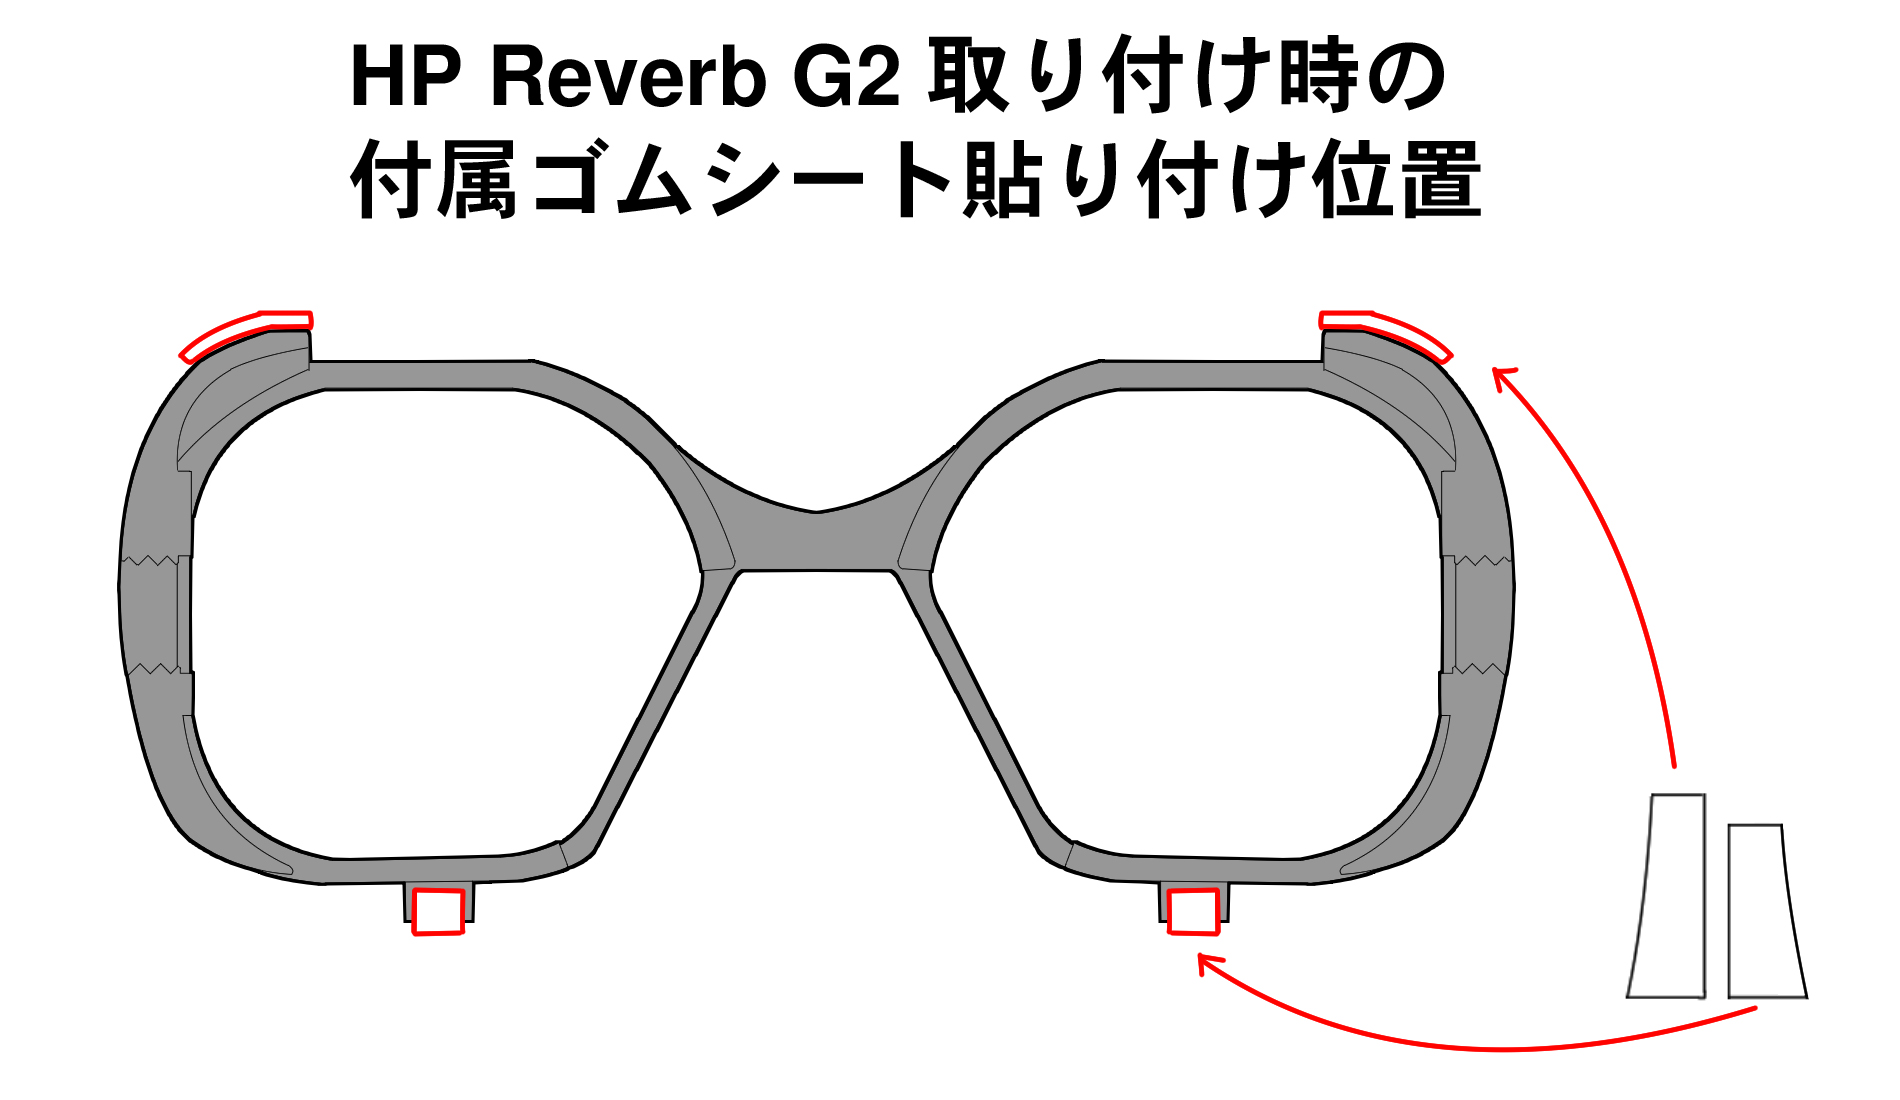 HP Reverb G2への取り付け対応のお知らせ | 株式会社diVRse/ダイバース